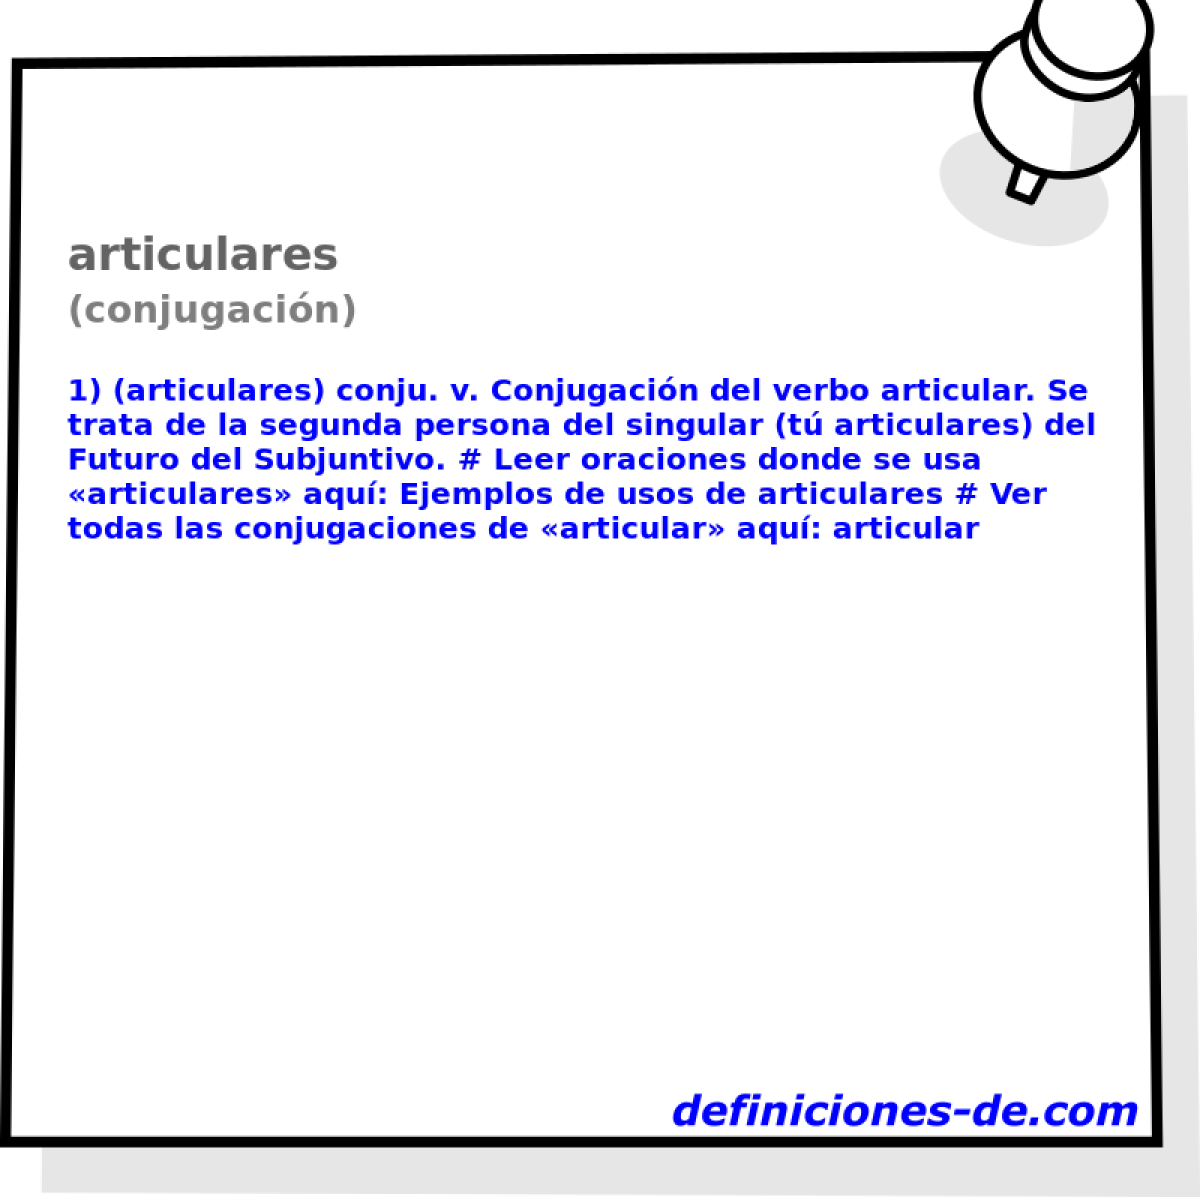 articulares (conjugacin)